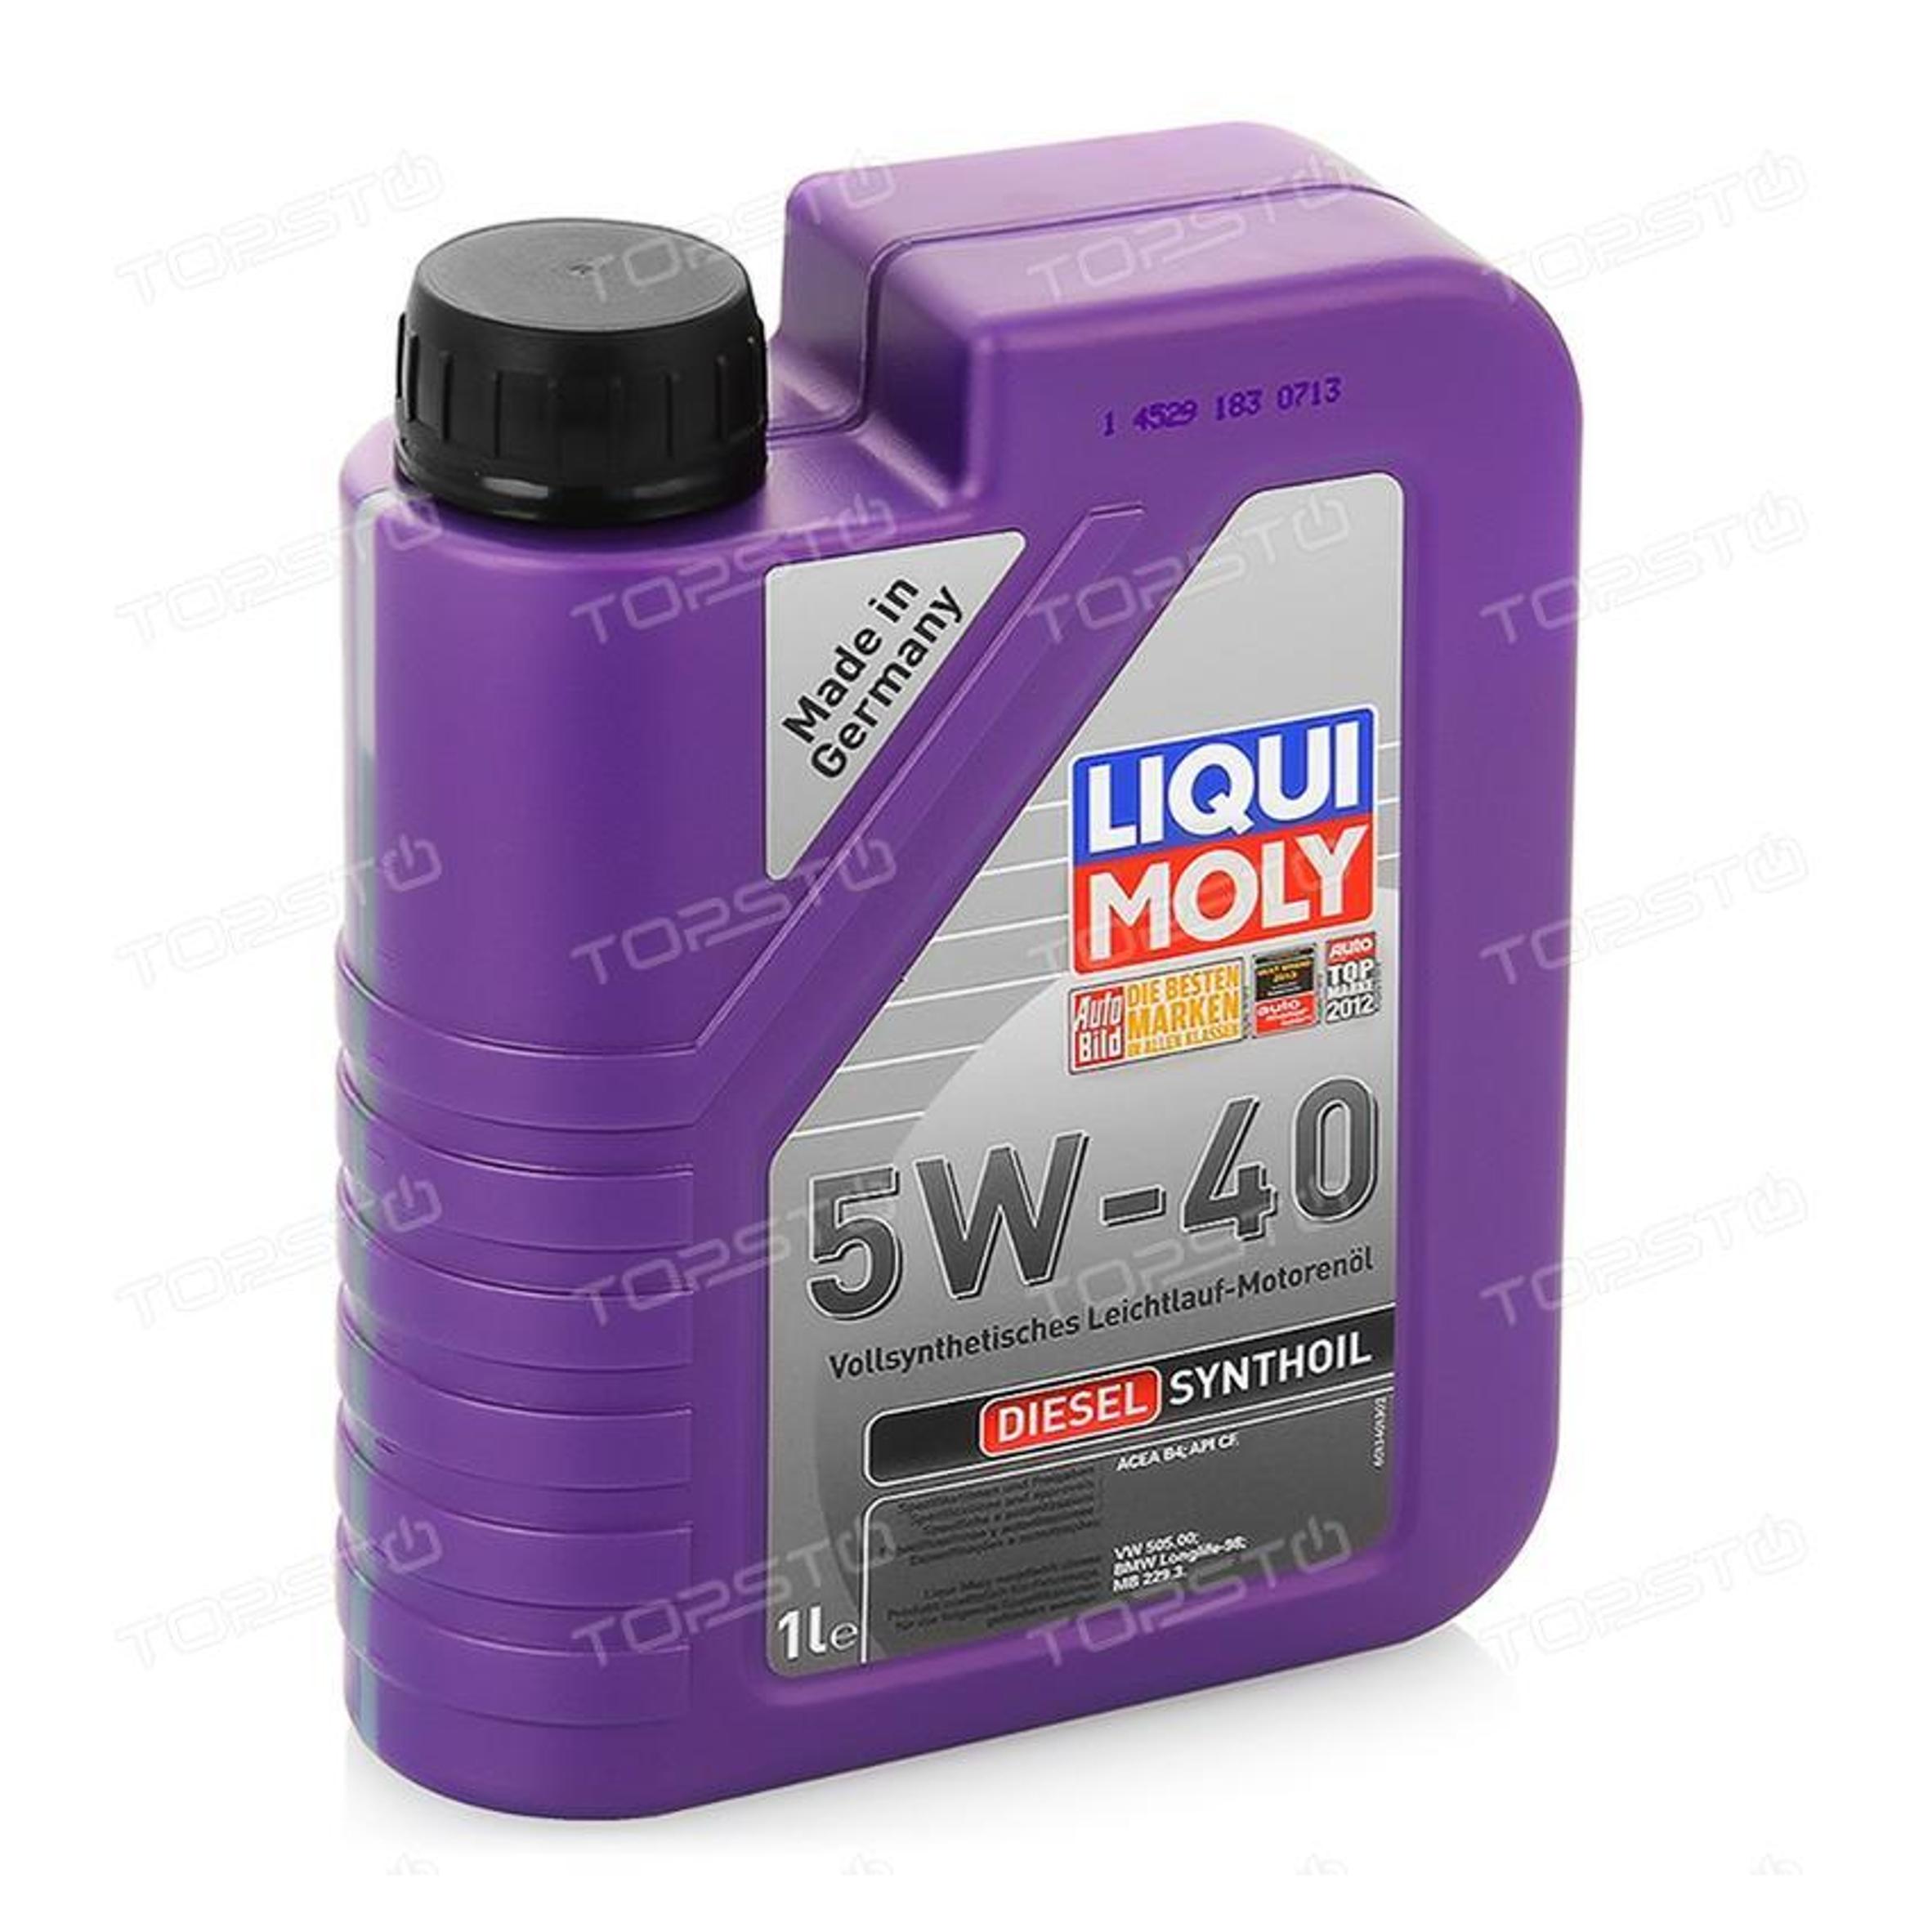 Liqui Moly Diesel Synthoil SAE 5W-40